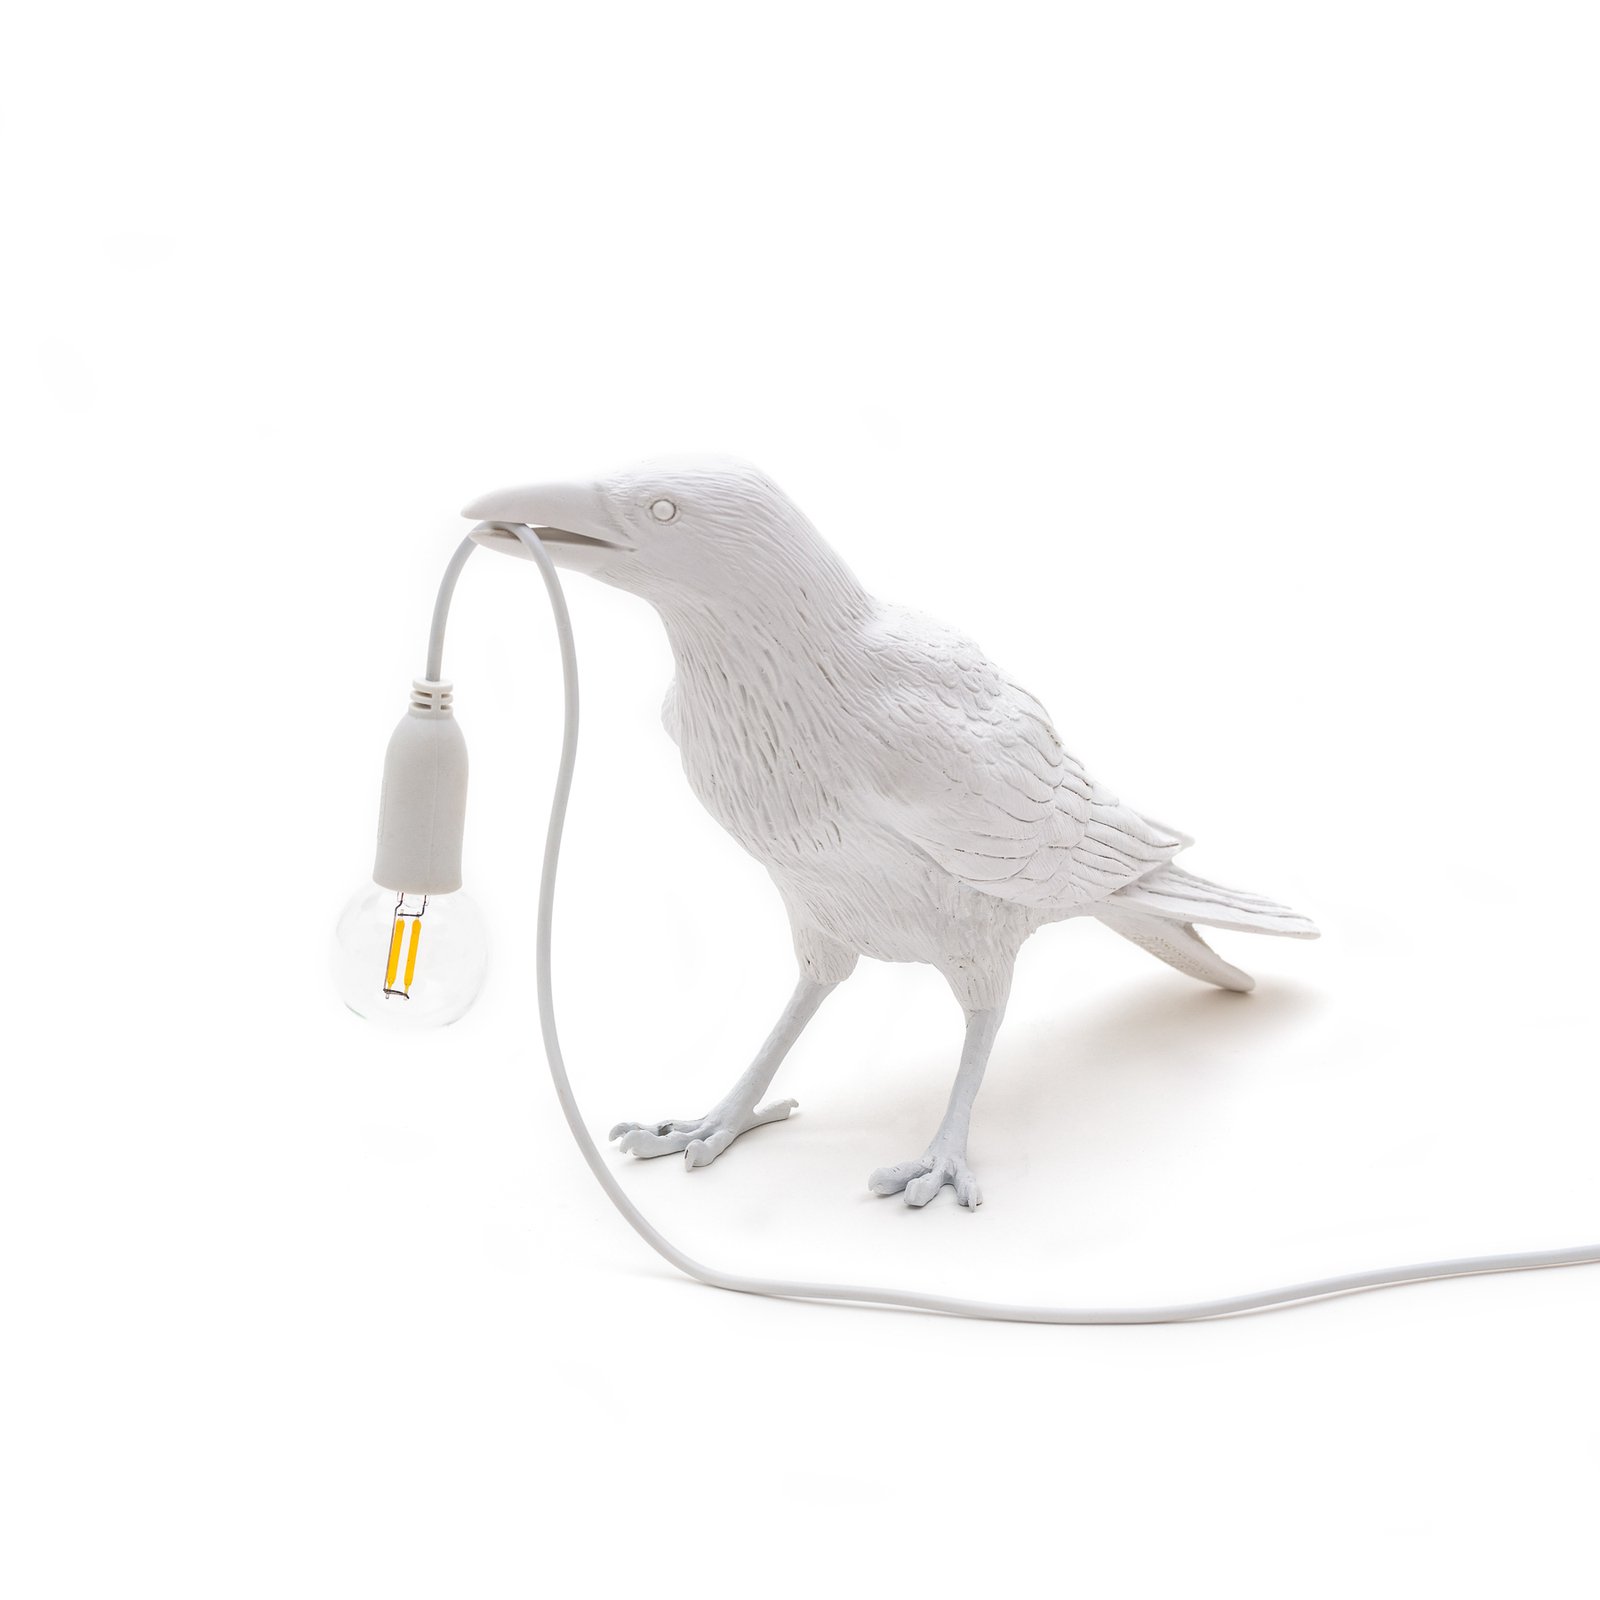 Lampa tarasowa LED Bird Lamp, czekać, biała